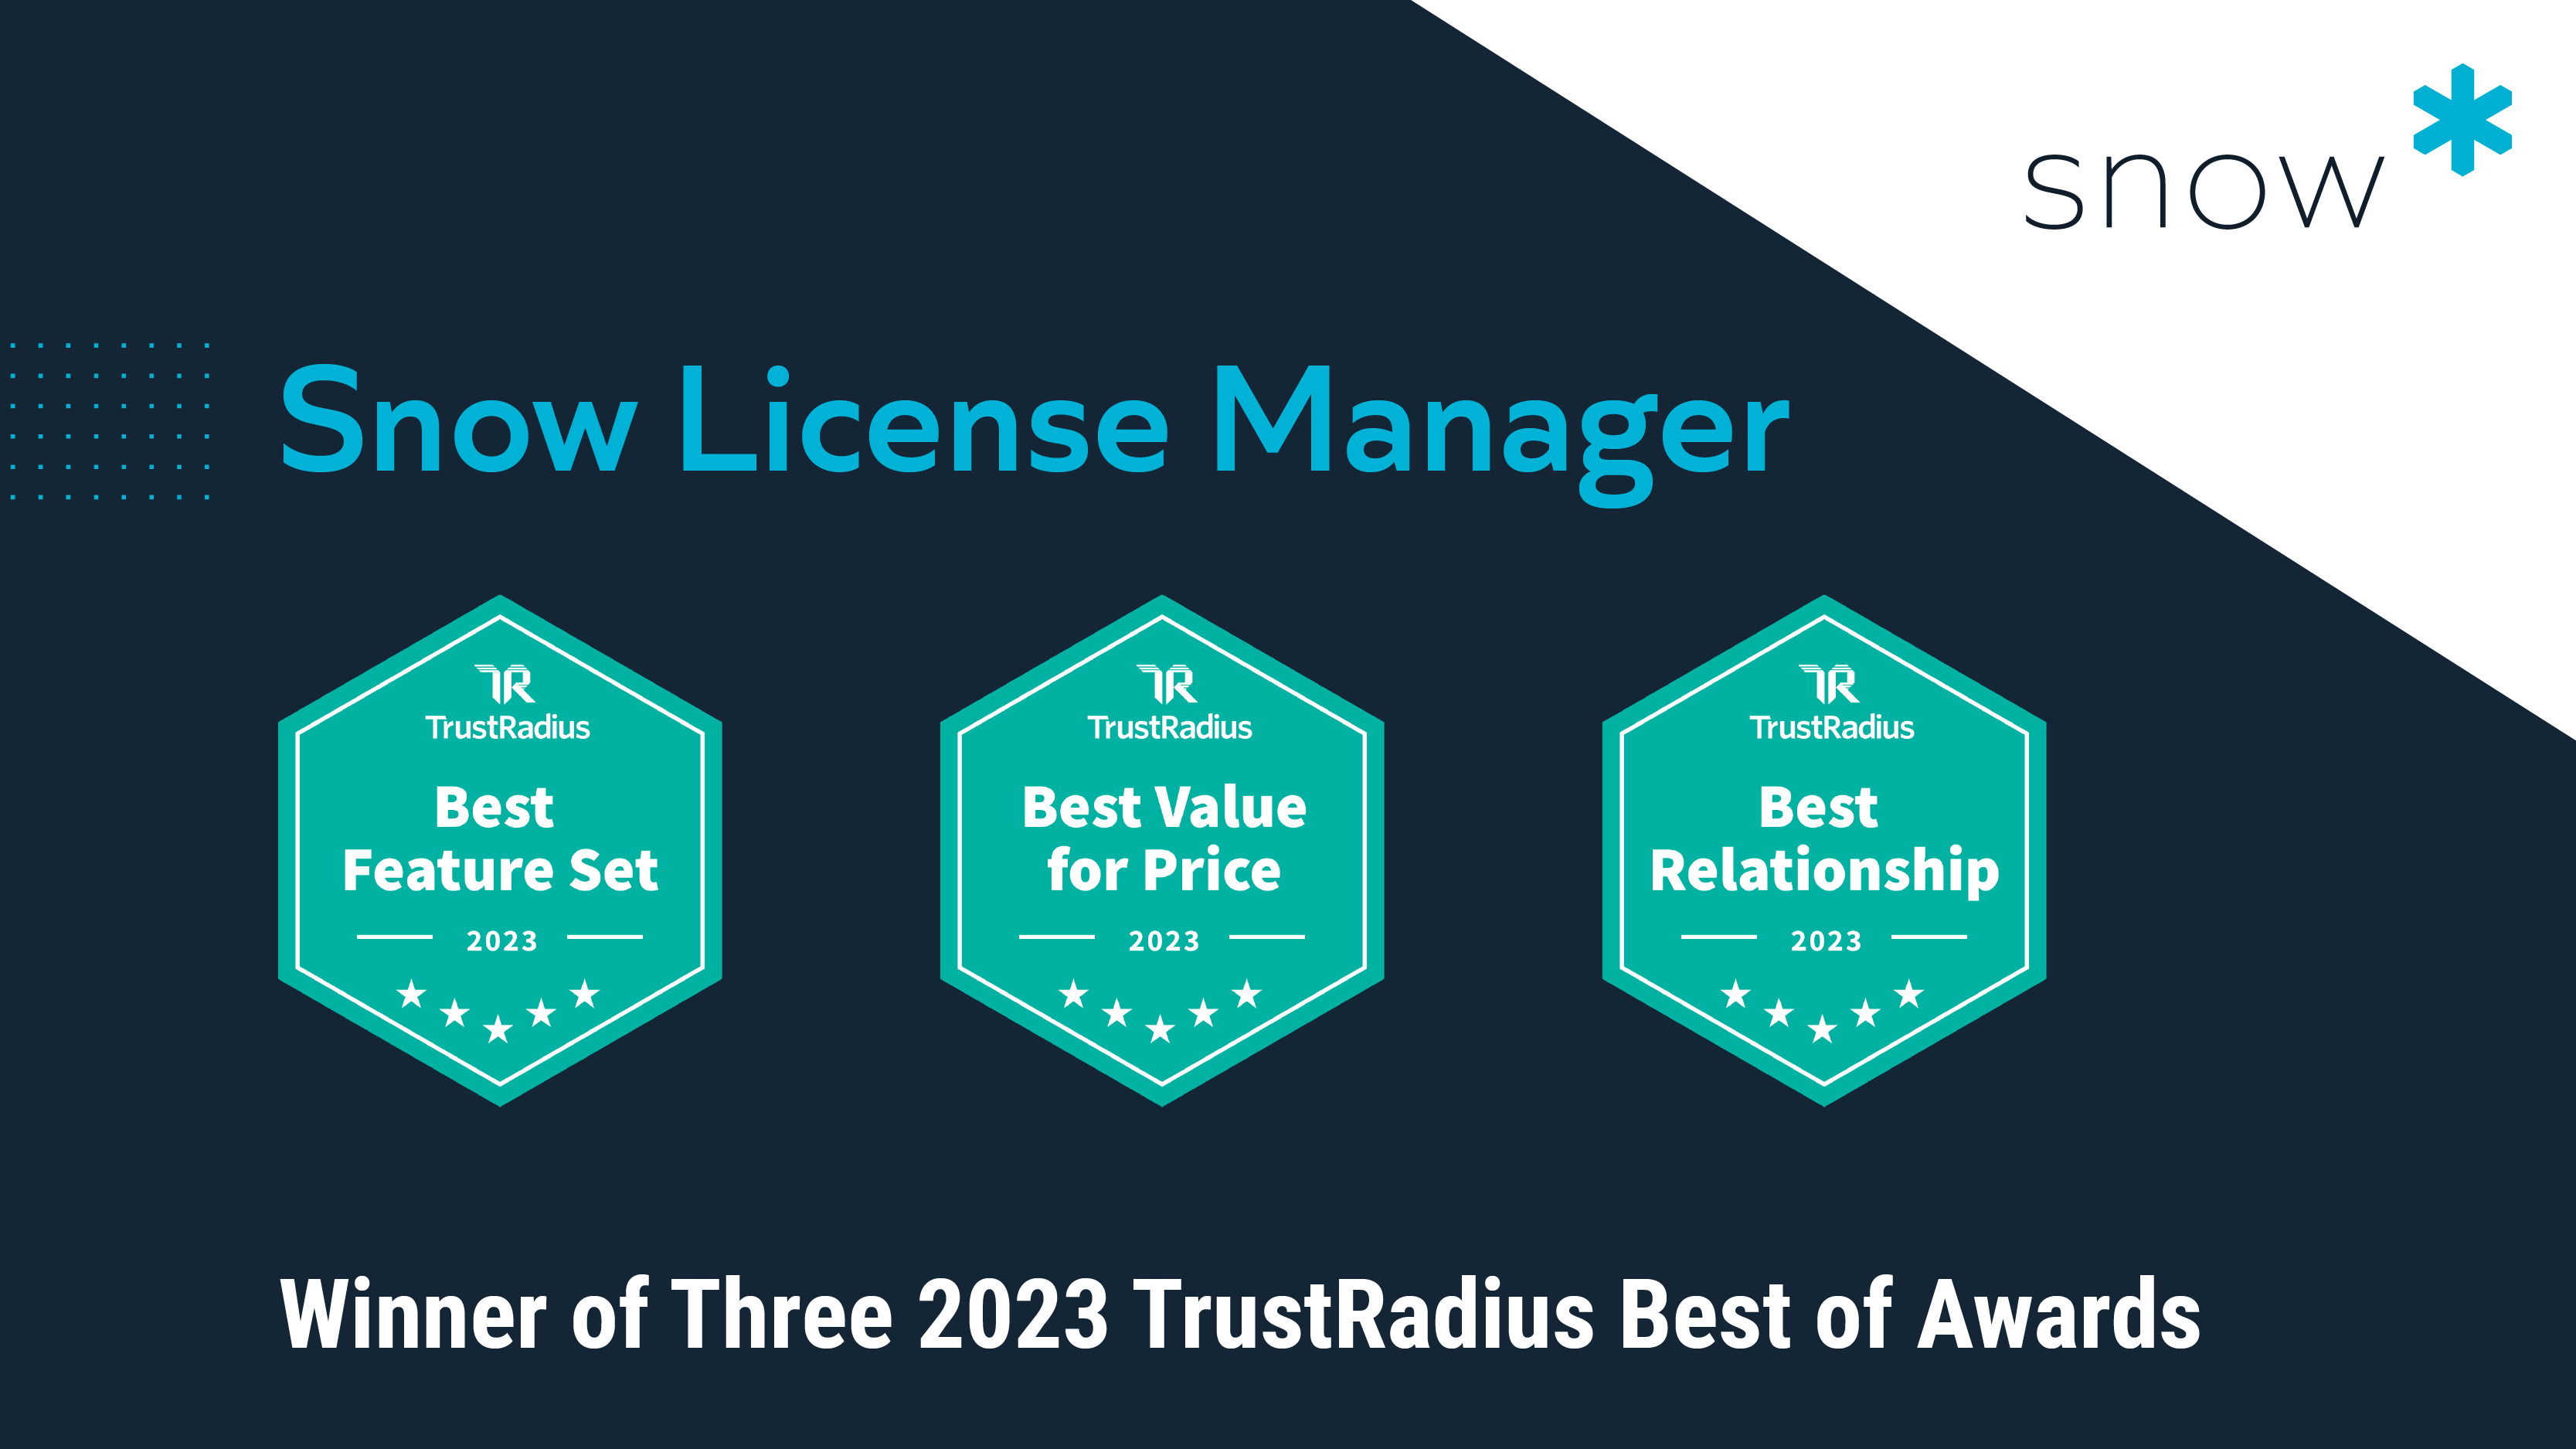 2023 Top Rated Awards Media Kit - TrustRadius for Vendors